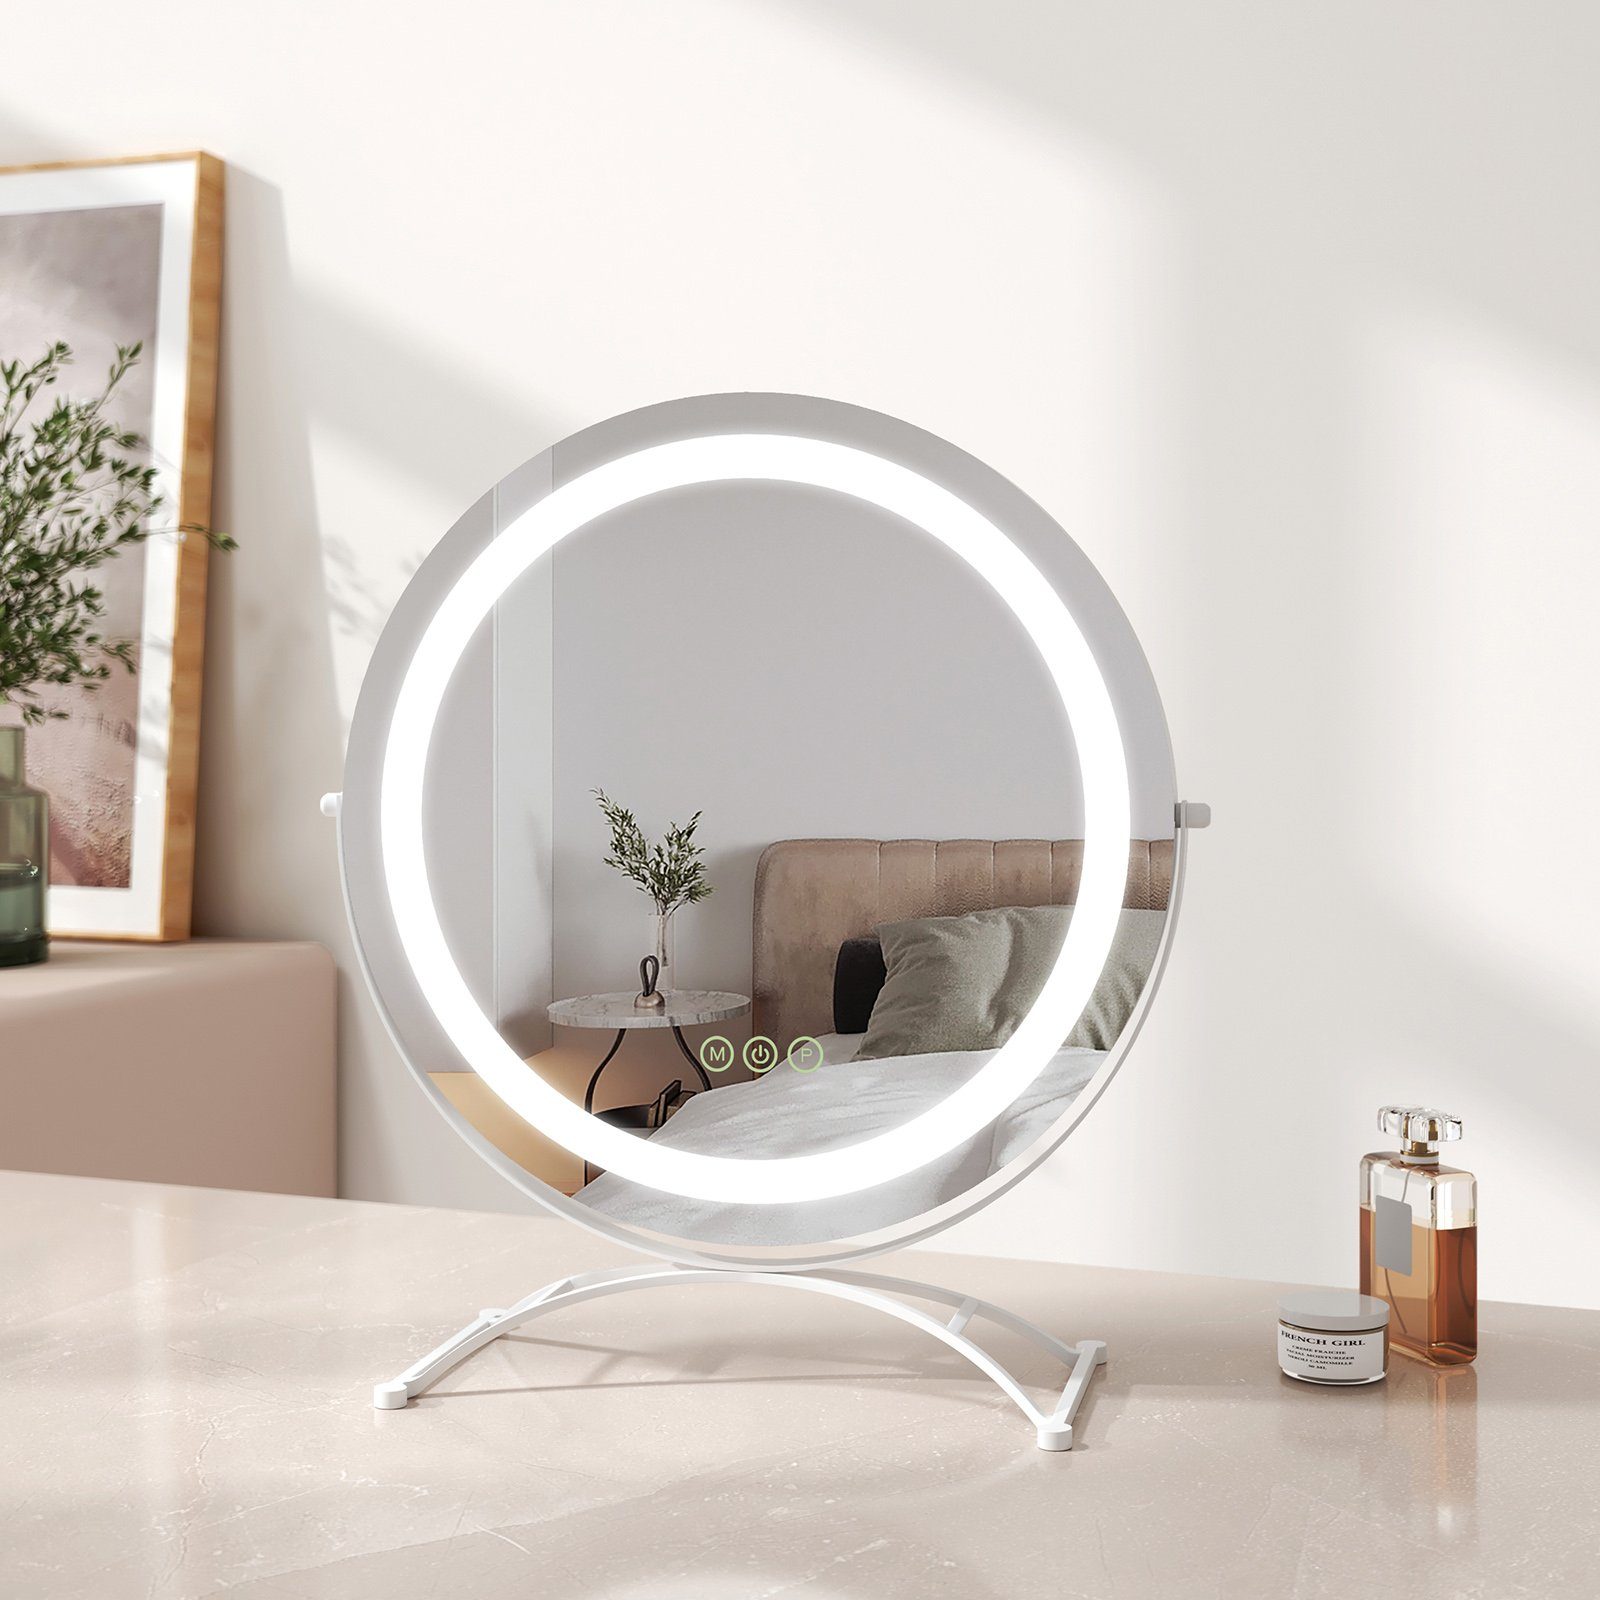 EMKE Kosmetikspiegel Schminkspiegel Runder Kosmetikspiegel mit Beleuchtung LED Tischspiegel, mit Touch, 3 Lichtfarben Dimmbar, Memory-Funktion, 360° Drehbar Weiß | Schminkspiegel